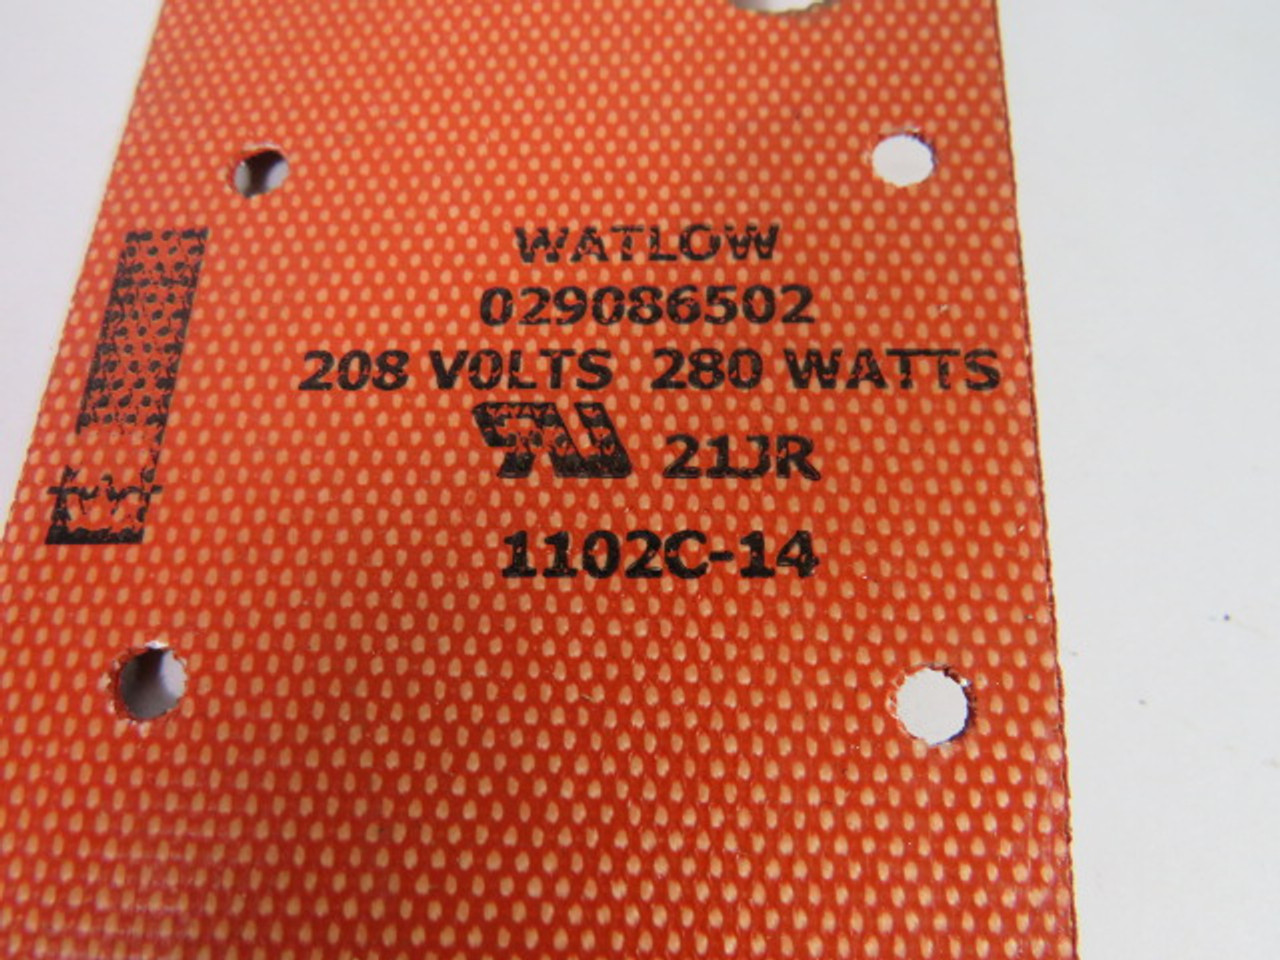 Watlow 029086502 (1101C-14) Silicon Heating Pad 4-PK 208V 280W USED